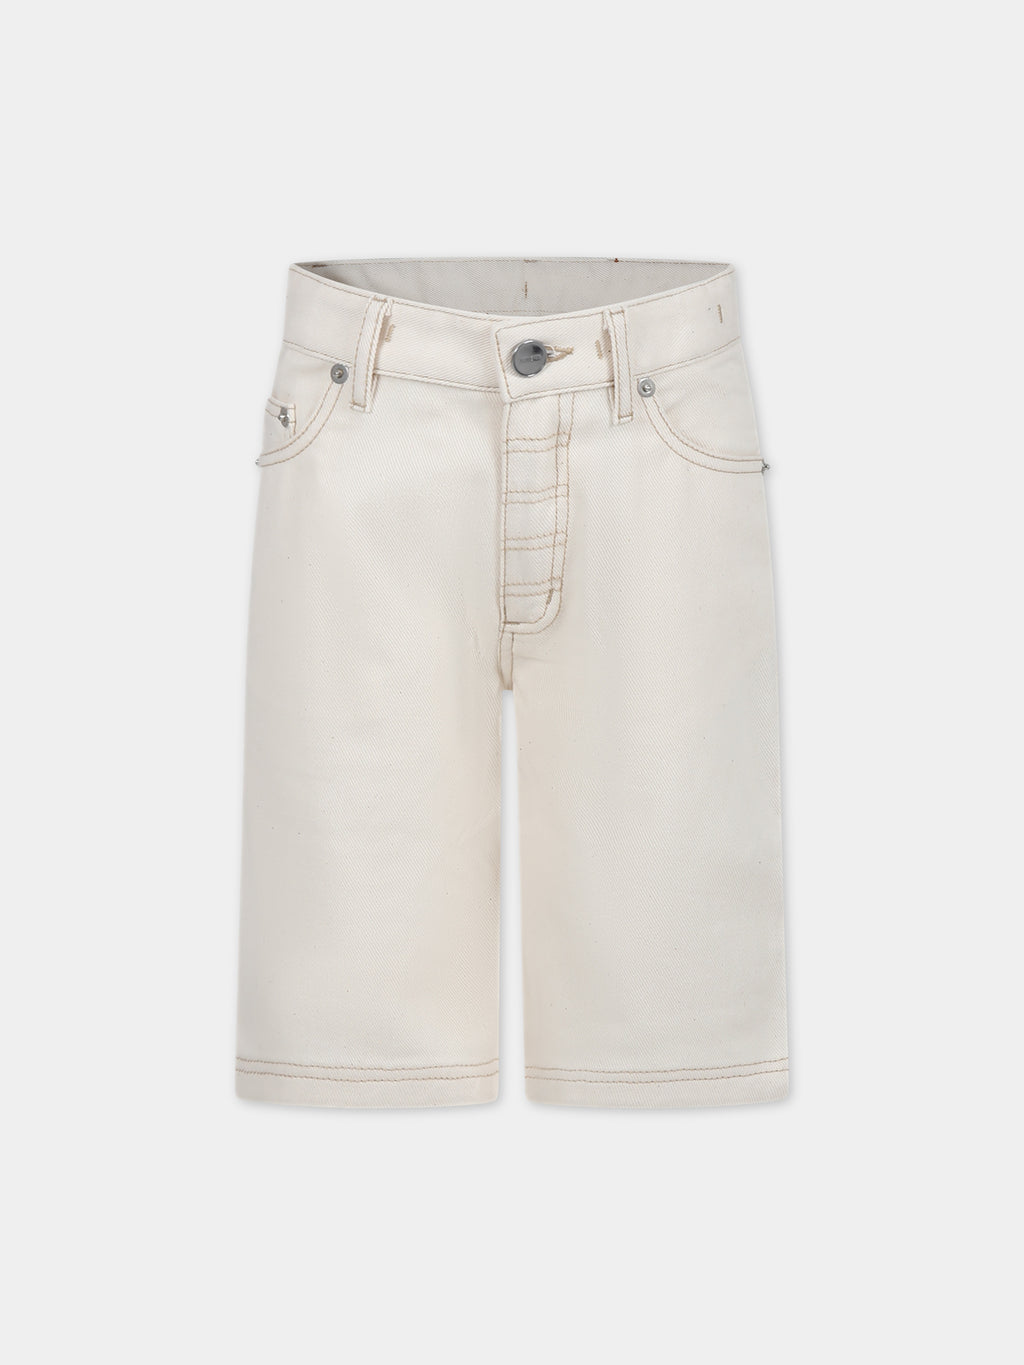 Ivory 'Le Short De Nimes' shorts for boy